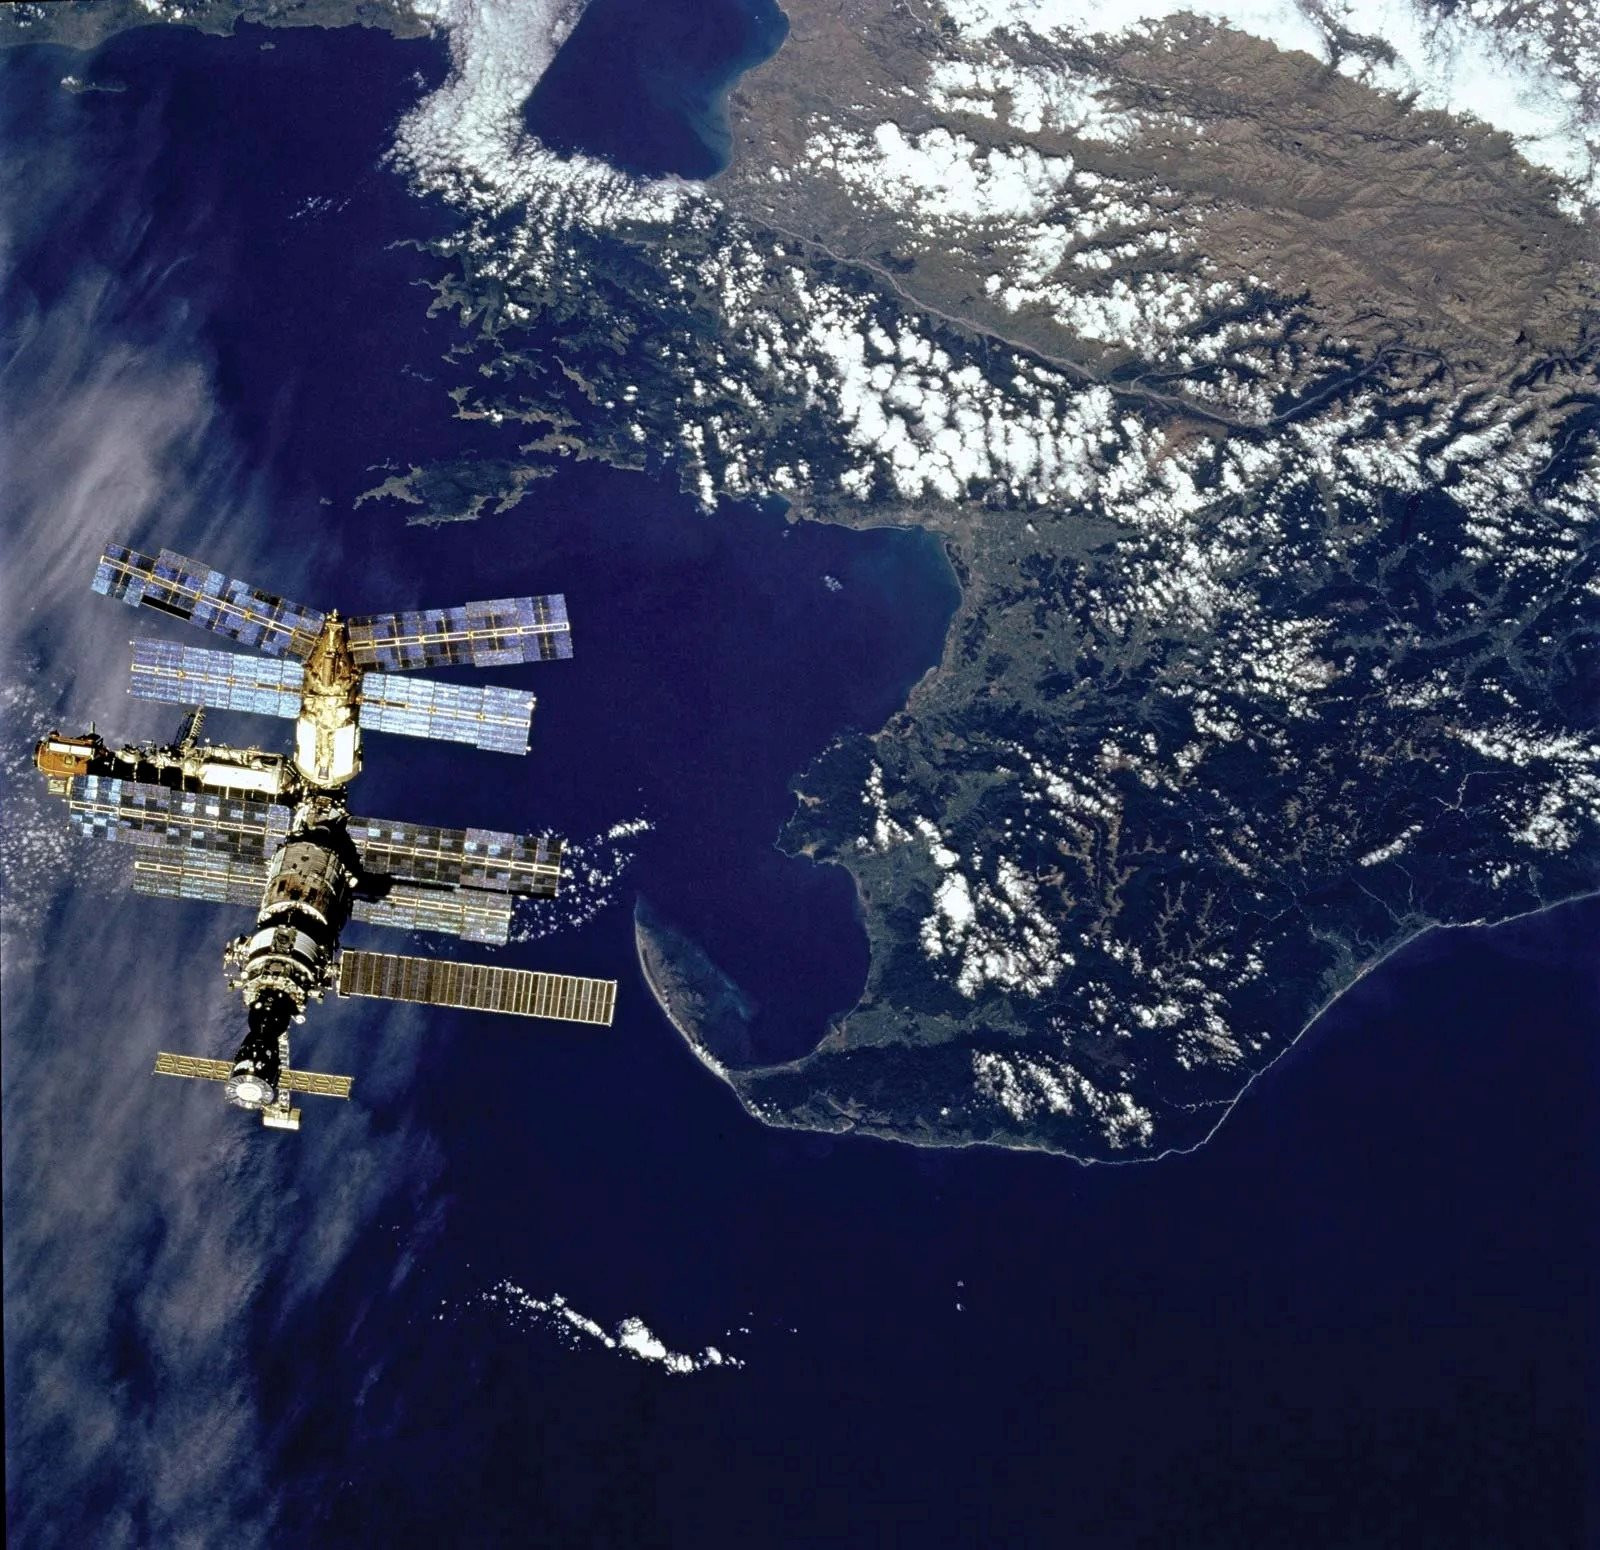 space-station-mir-russian-atlantis-cook-strait-march-23-1996_11zon.jpg